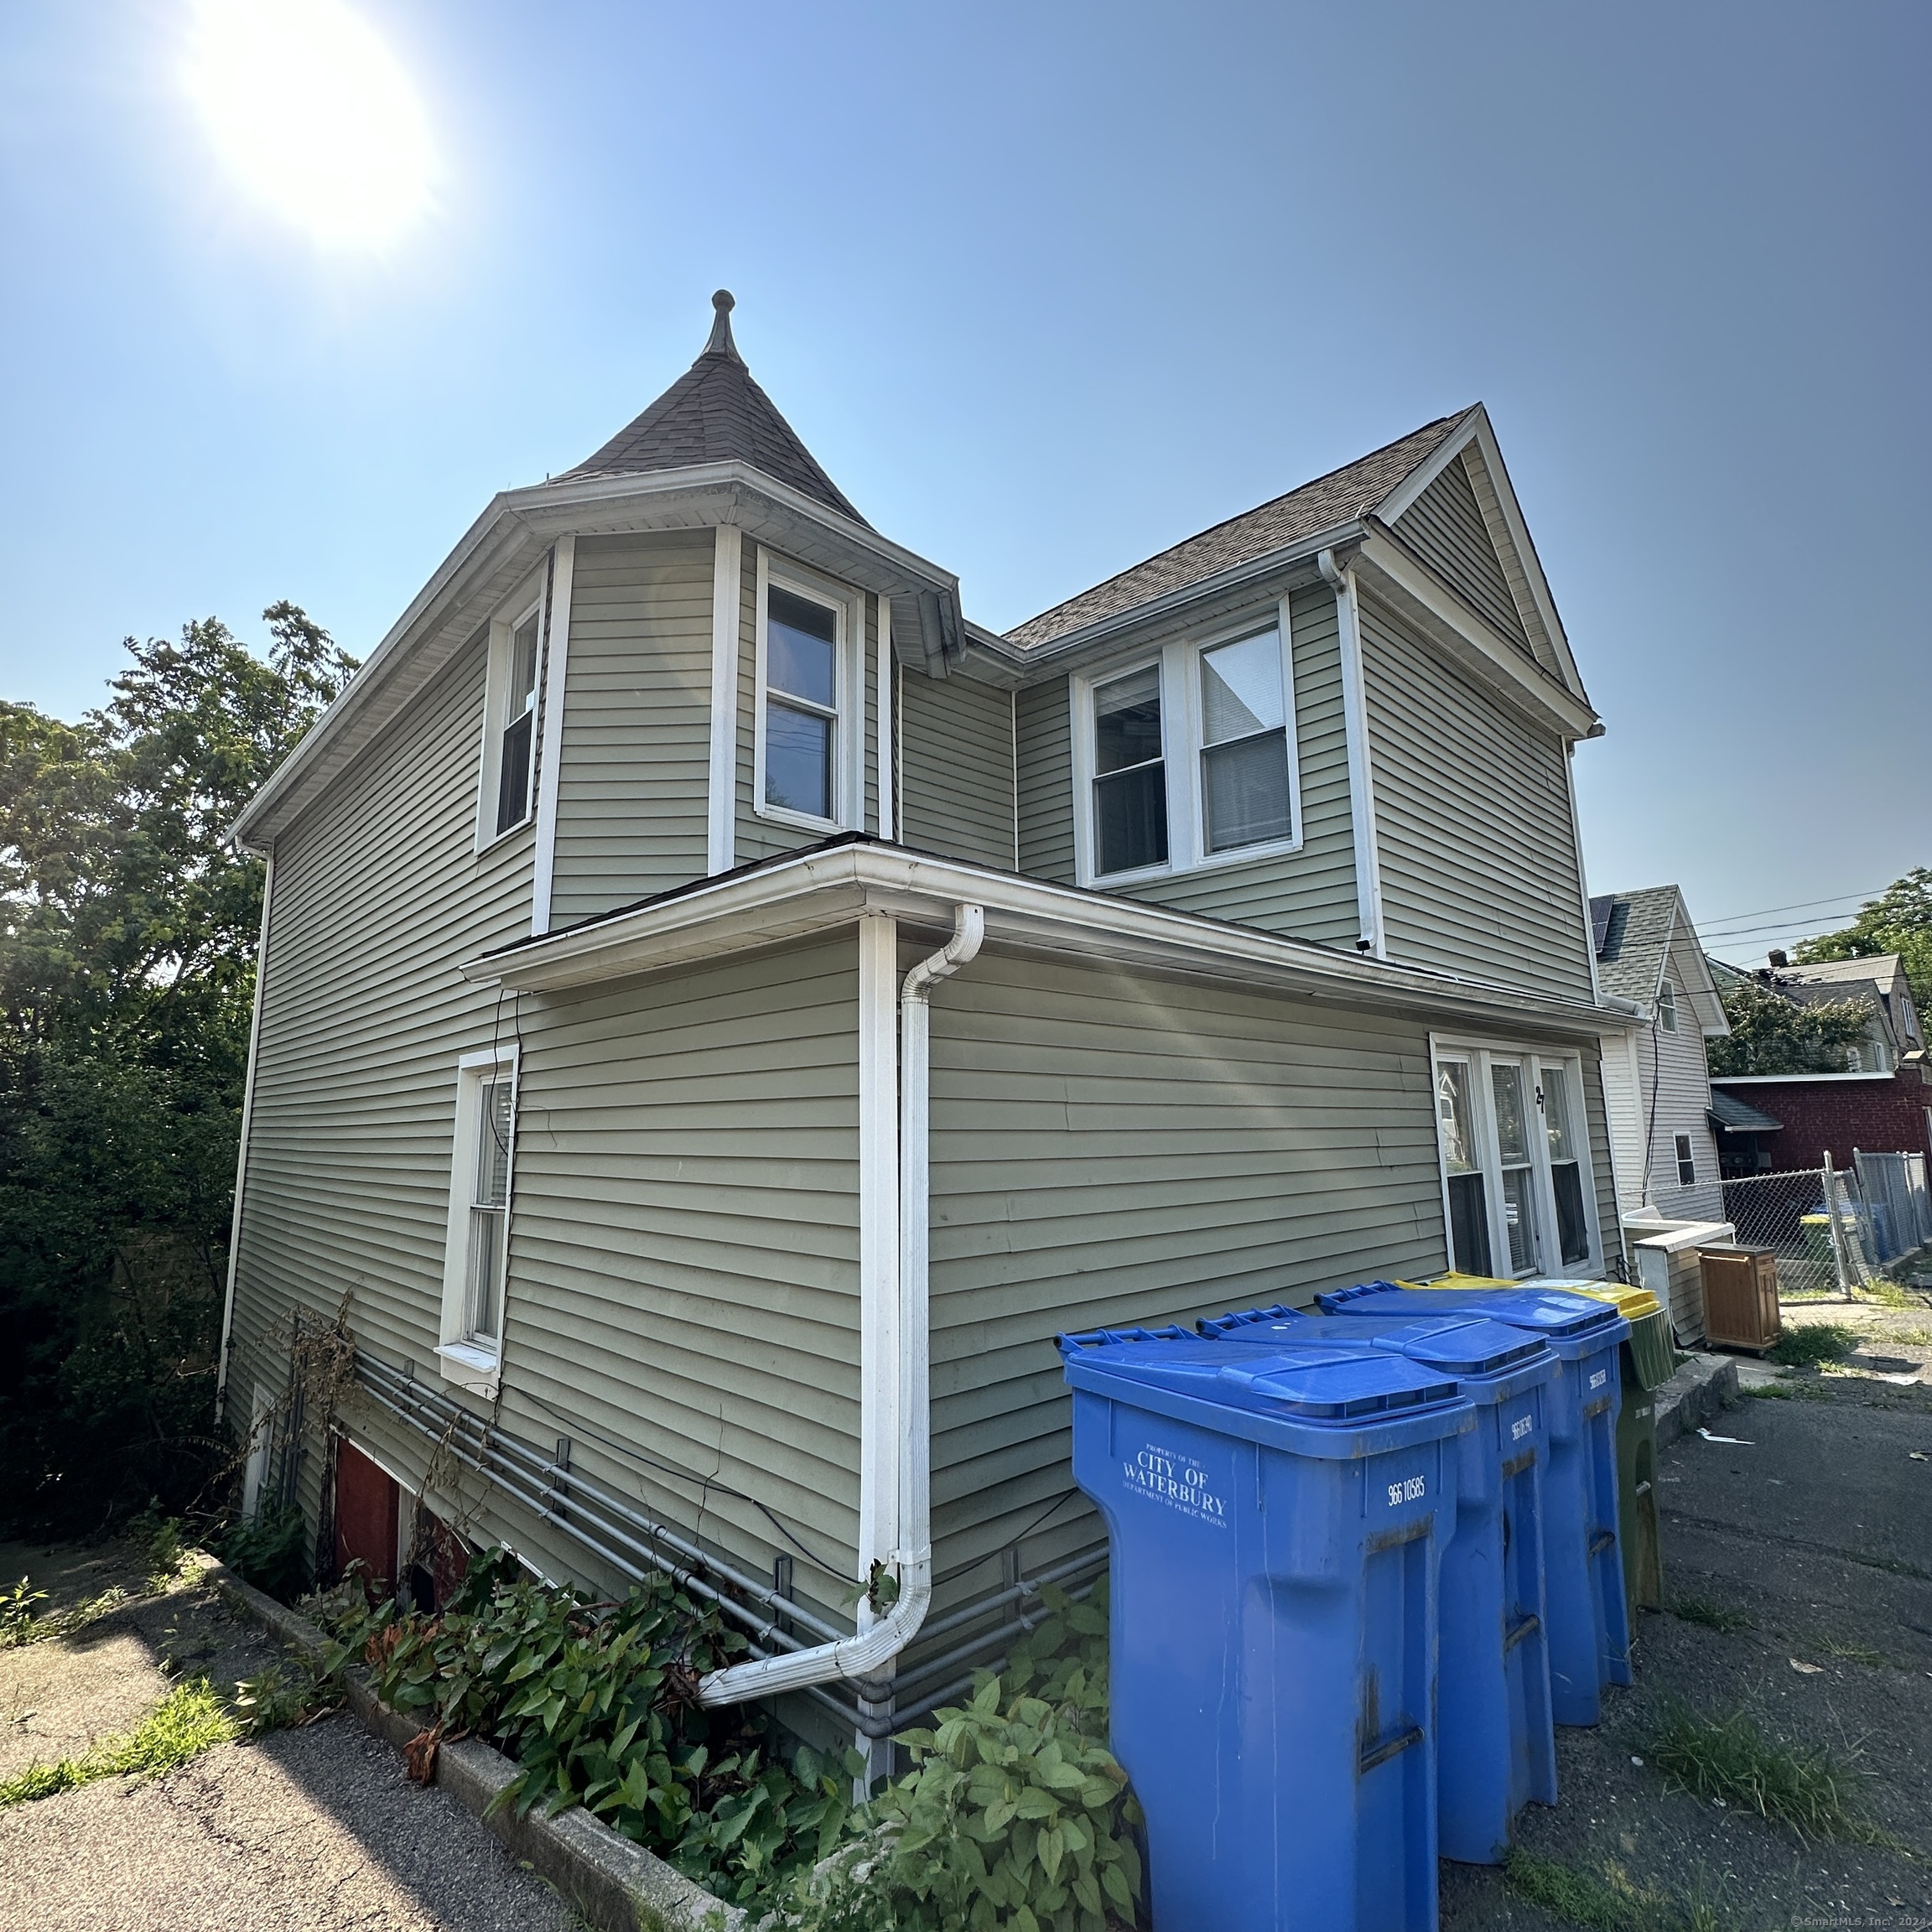 Rental Property at 27 Manhan Street 1st Fl, Waterbury, Connecticut - Bedrooms: 3 
Bathrooms: 1 
Rooms: 6  - $1,500 MO.